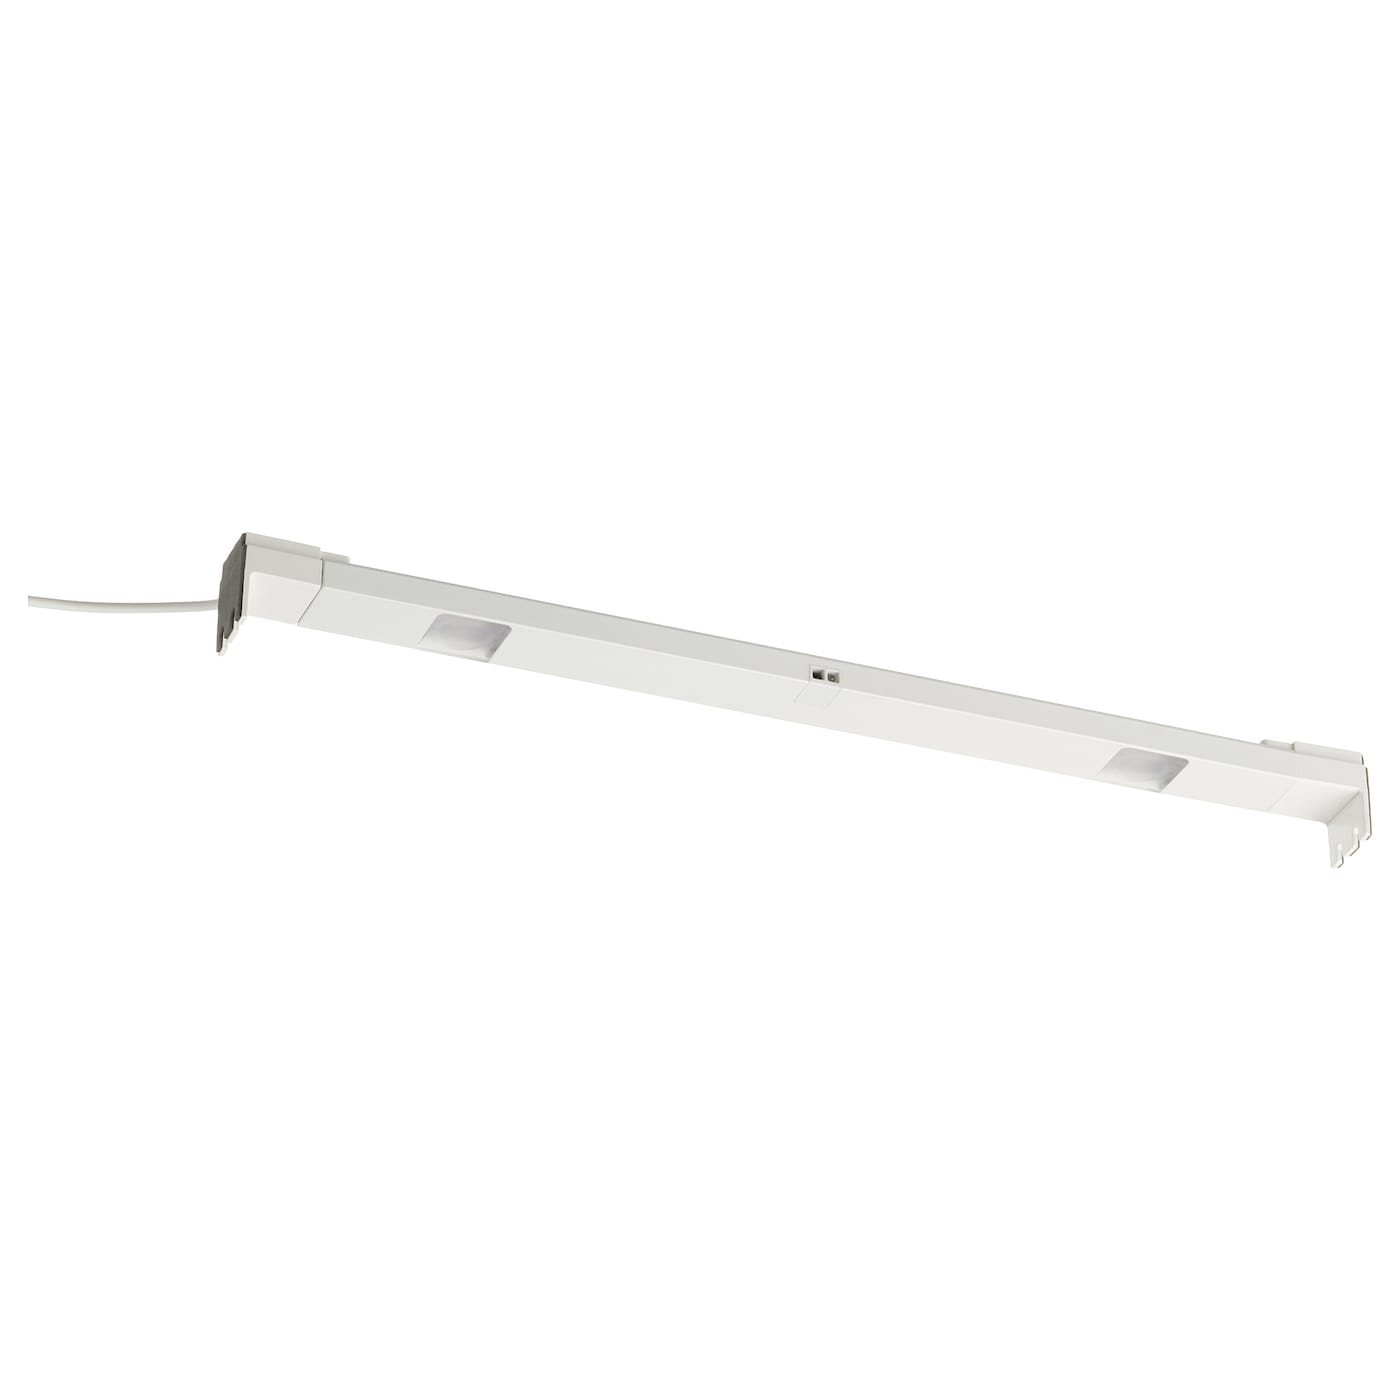 Светильники на светодиодах - MITTLED IKEA/ МИТТЛЕД ИКЕА, 3 см,  белый